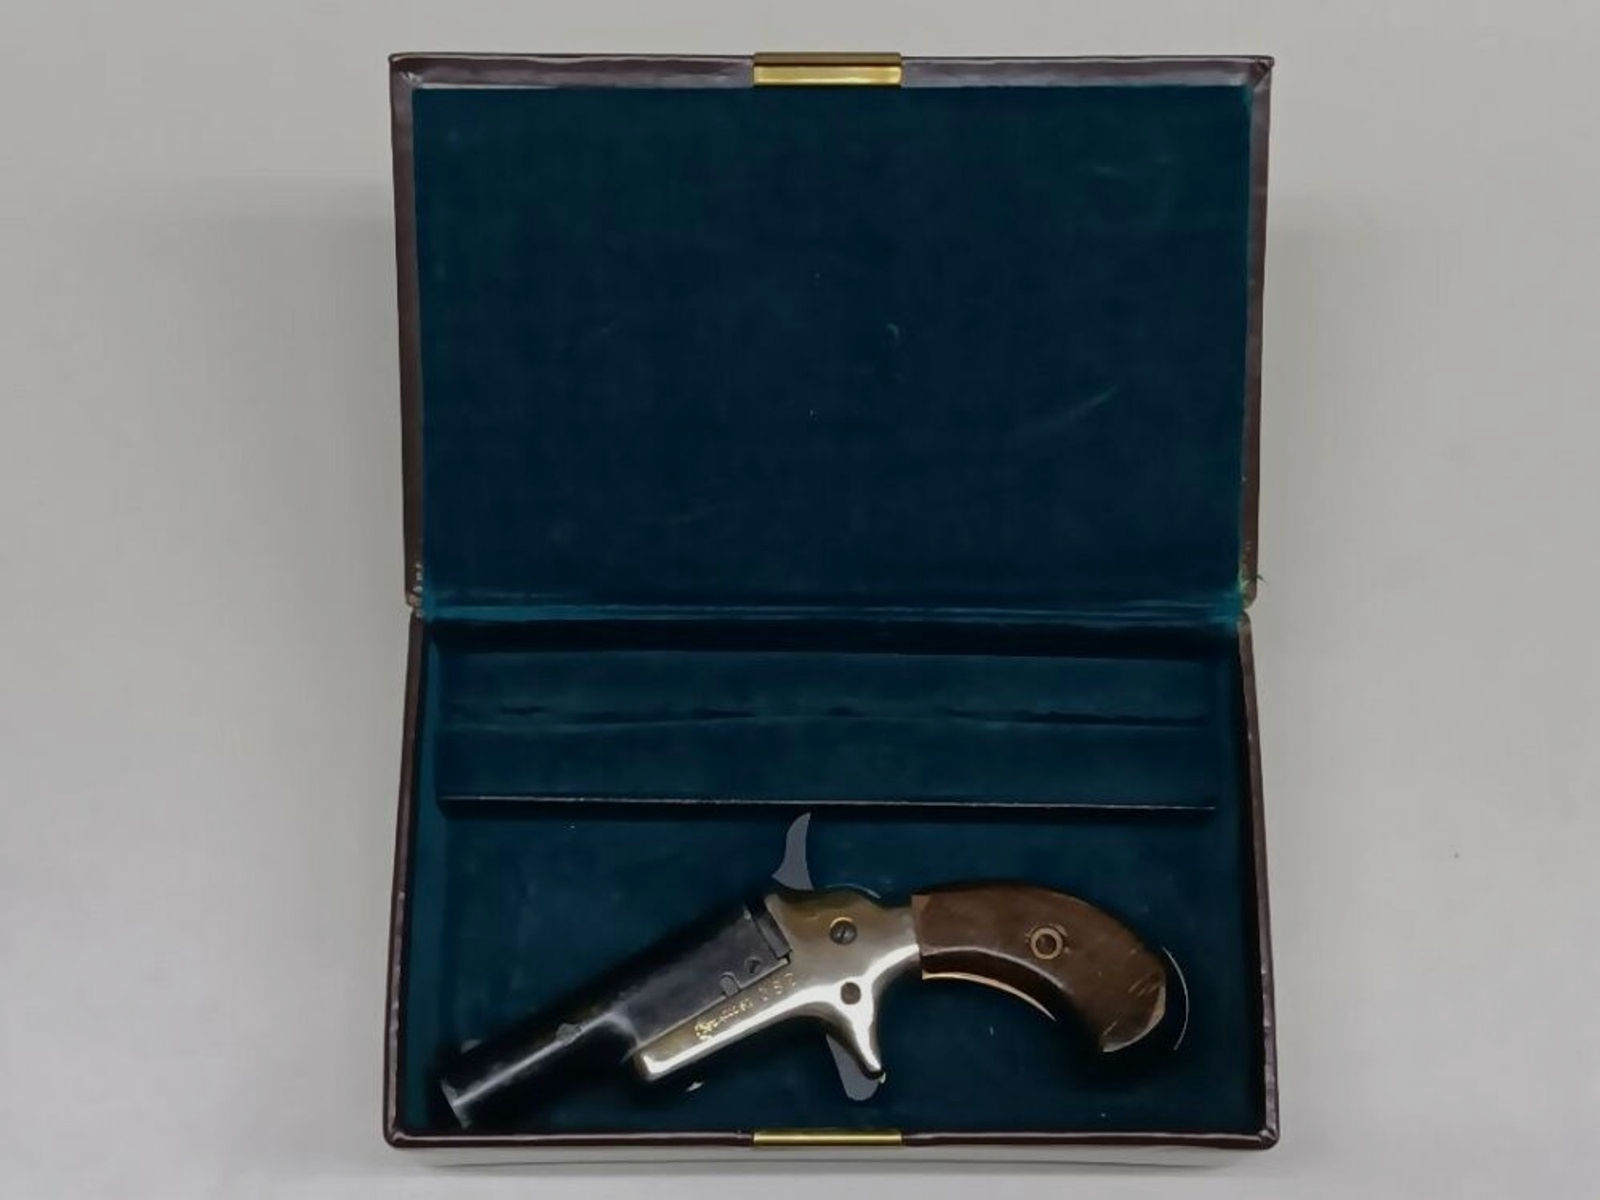 Hy Hunter Firearms - Hollywood	 Derringer Model 1873